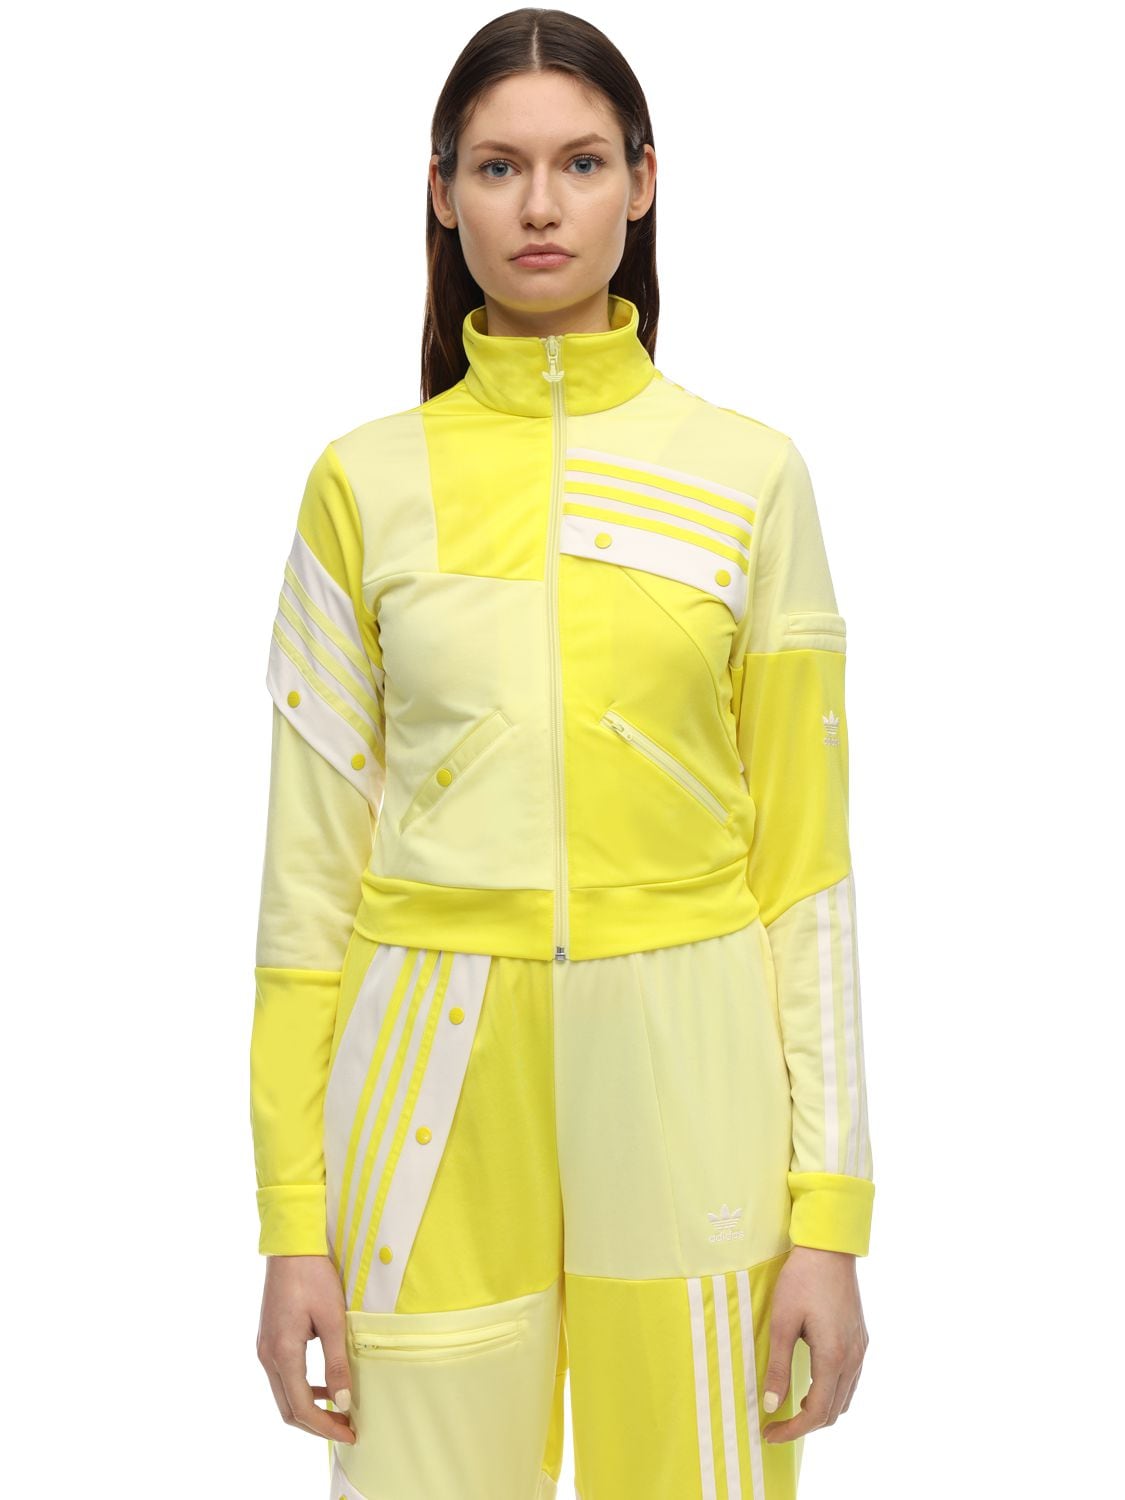 Adidas Originals X Danielle Cathari Track Jacket In Shock Yellow | ModeSens